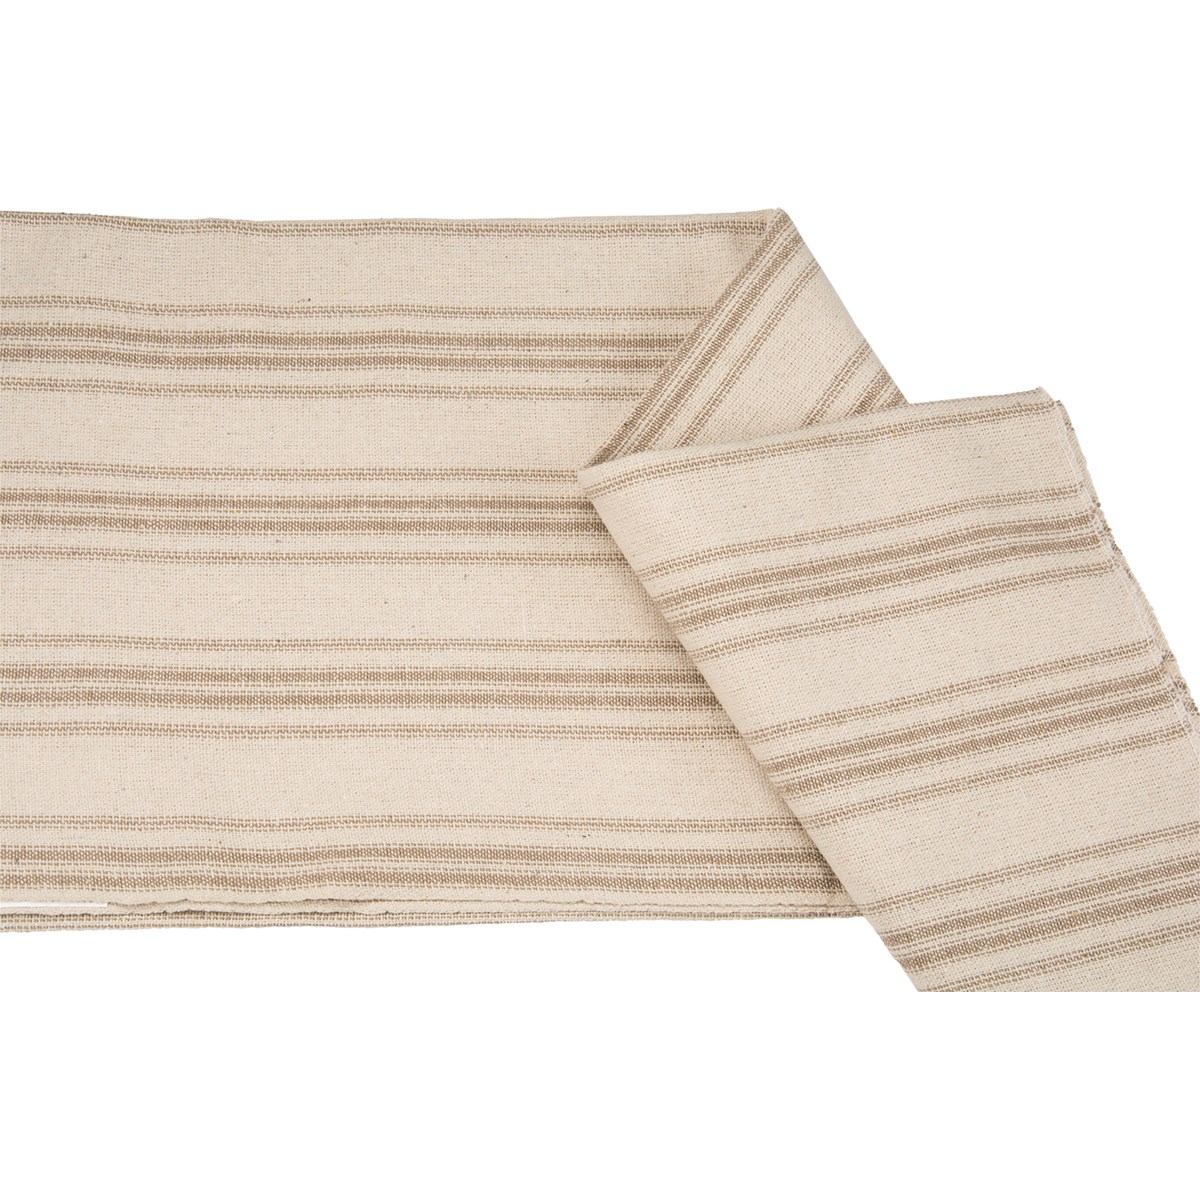 Tan 12 Stripes Cream Fabric - Cotton